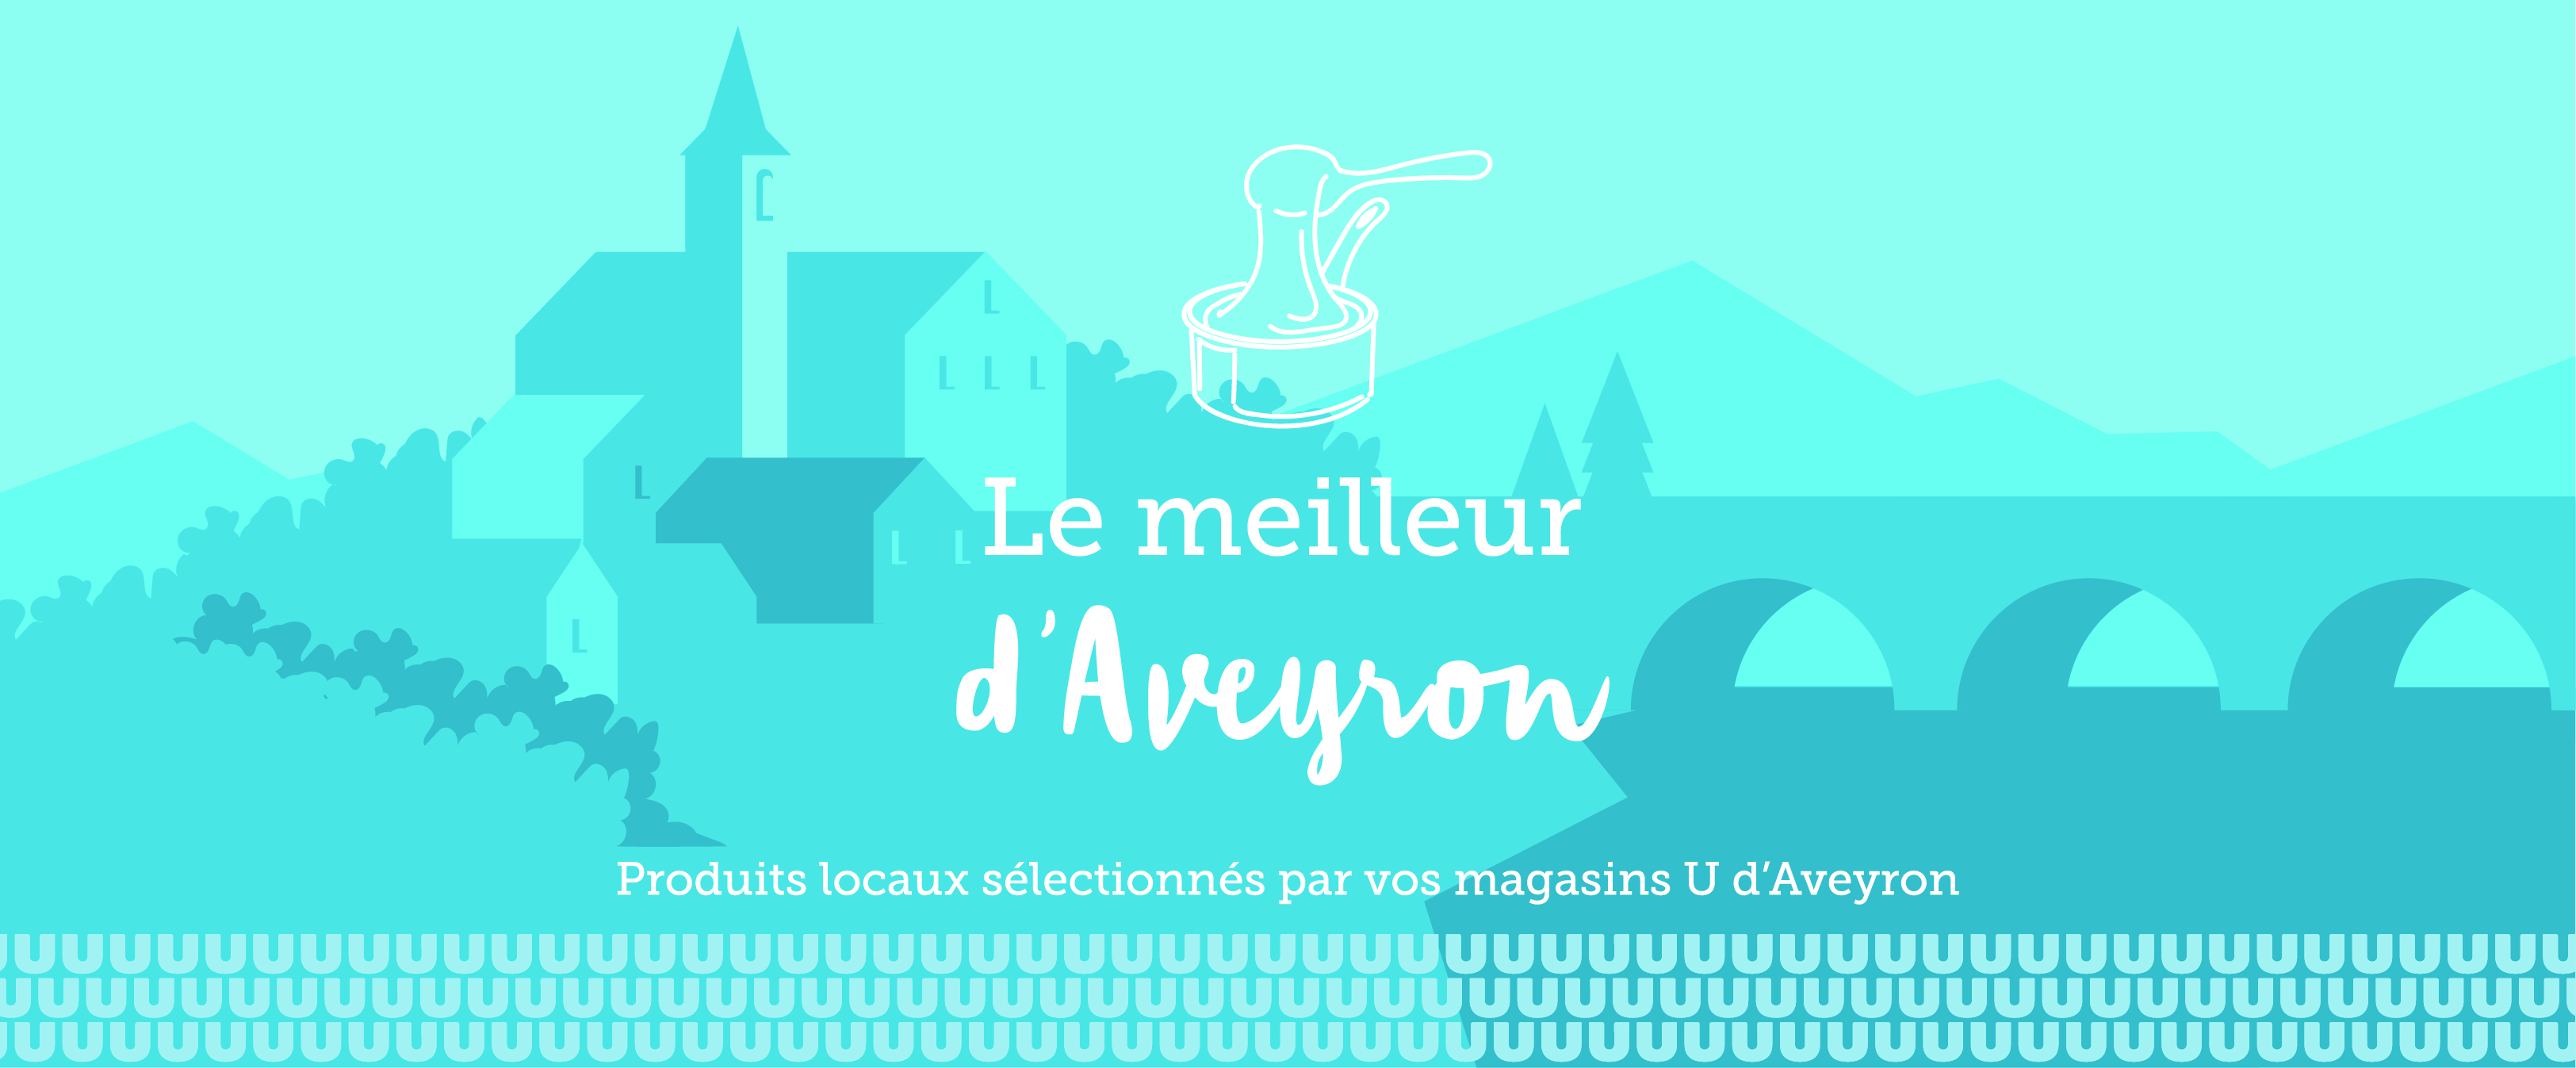 Le meilleur d'Aveyron